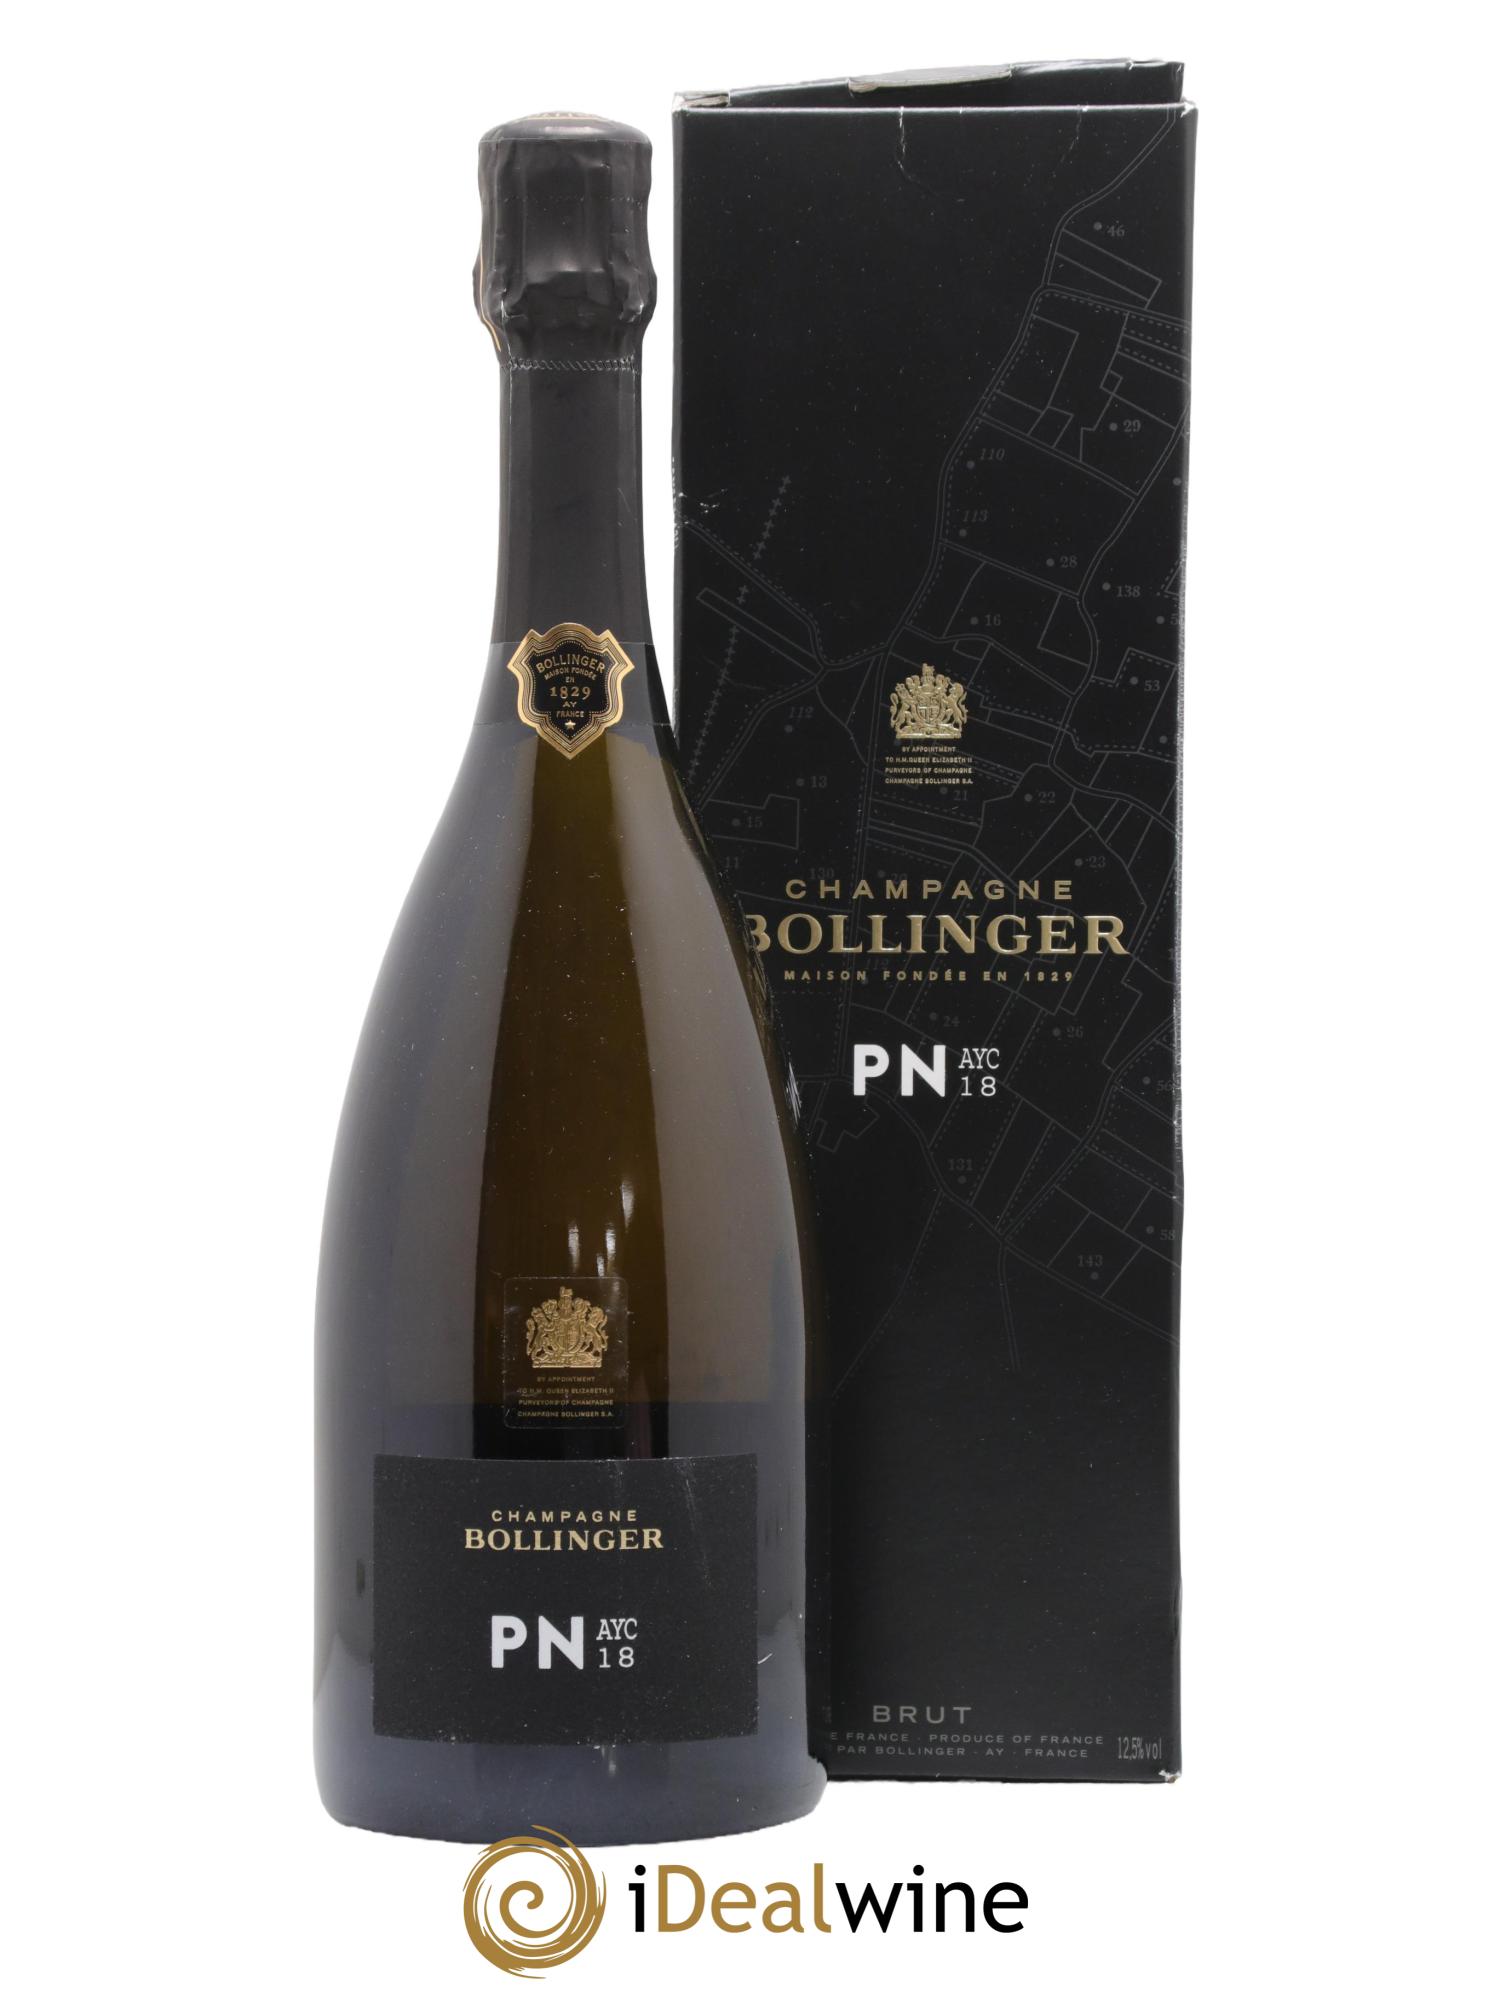 Champagne Bollinger PN AYC 18 (Blanc effervescent)